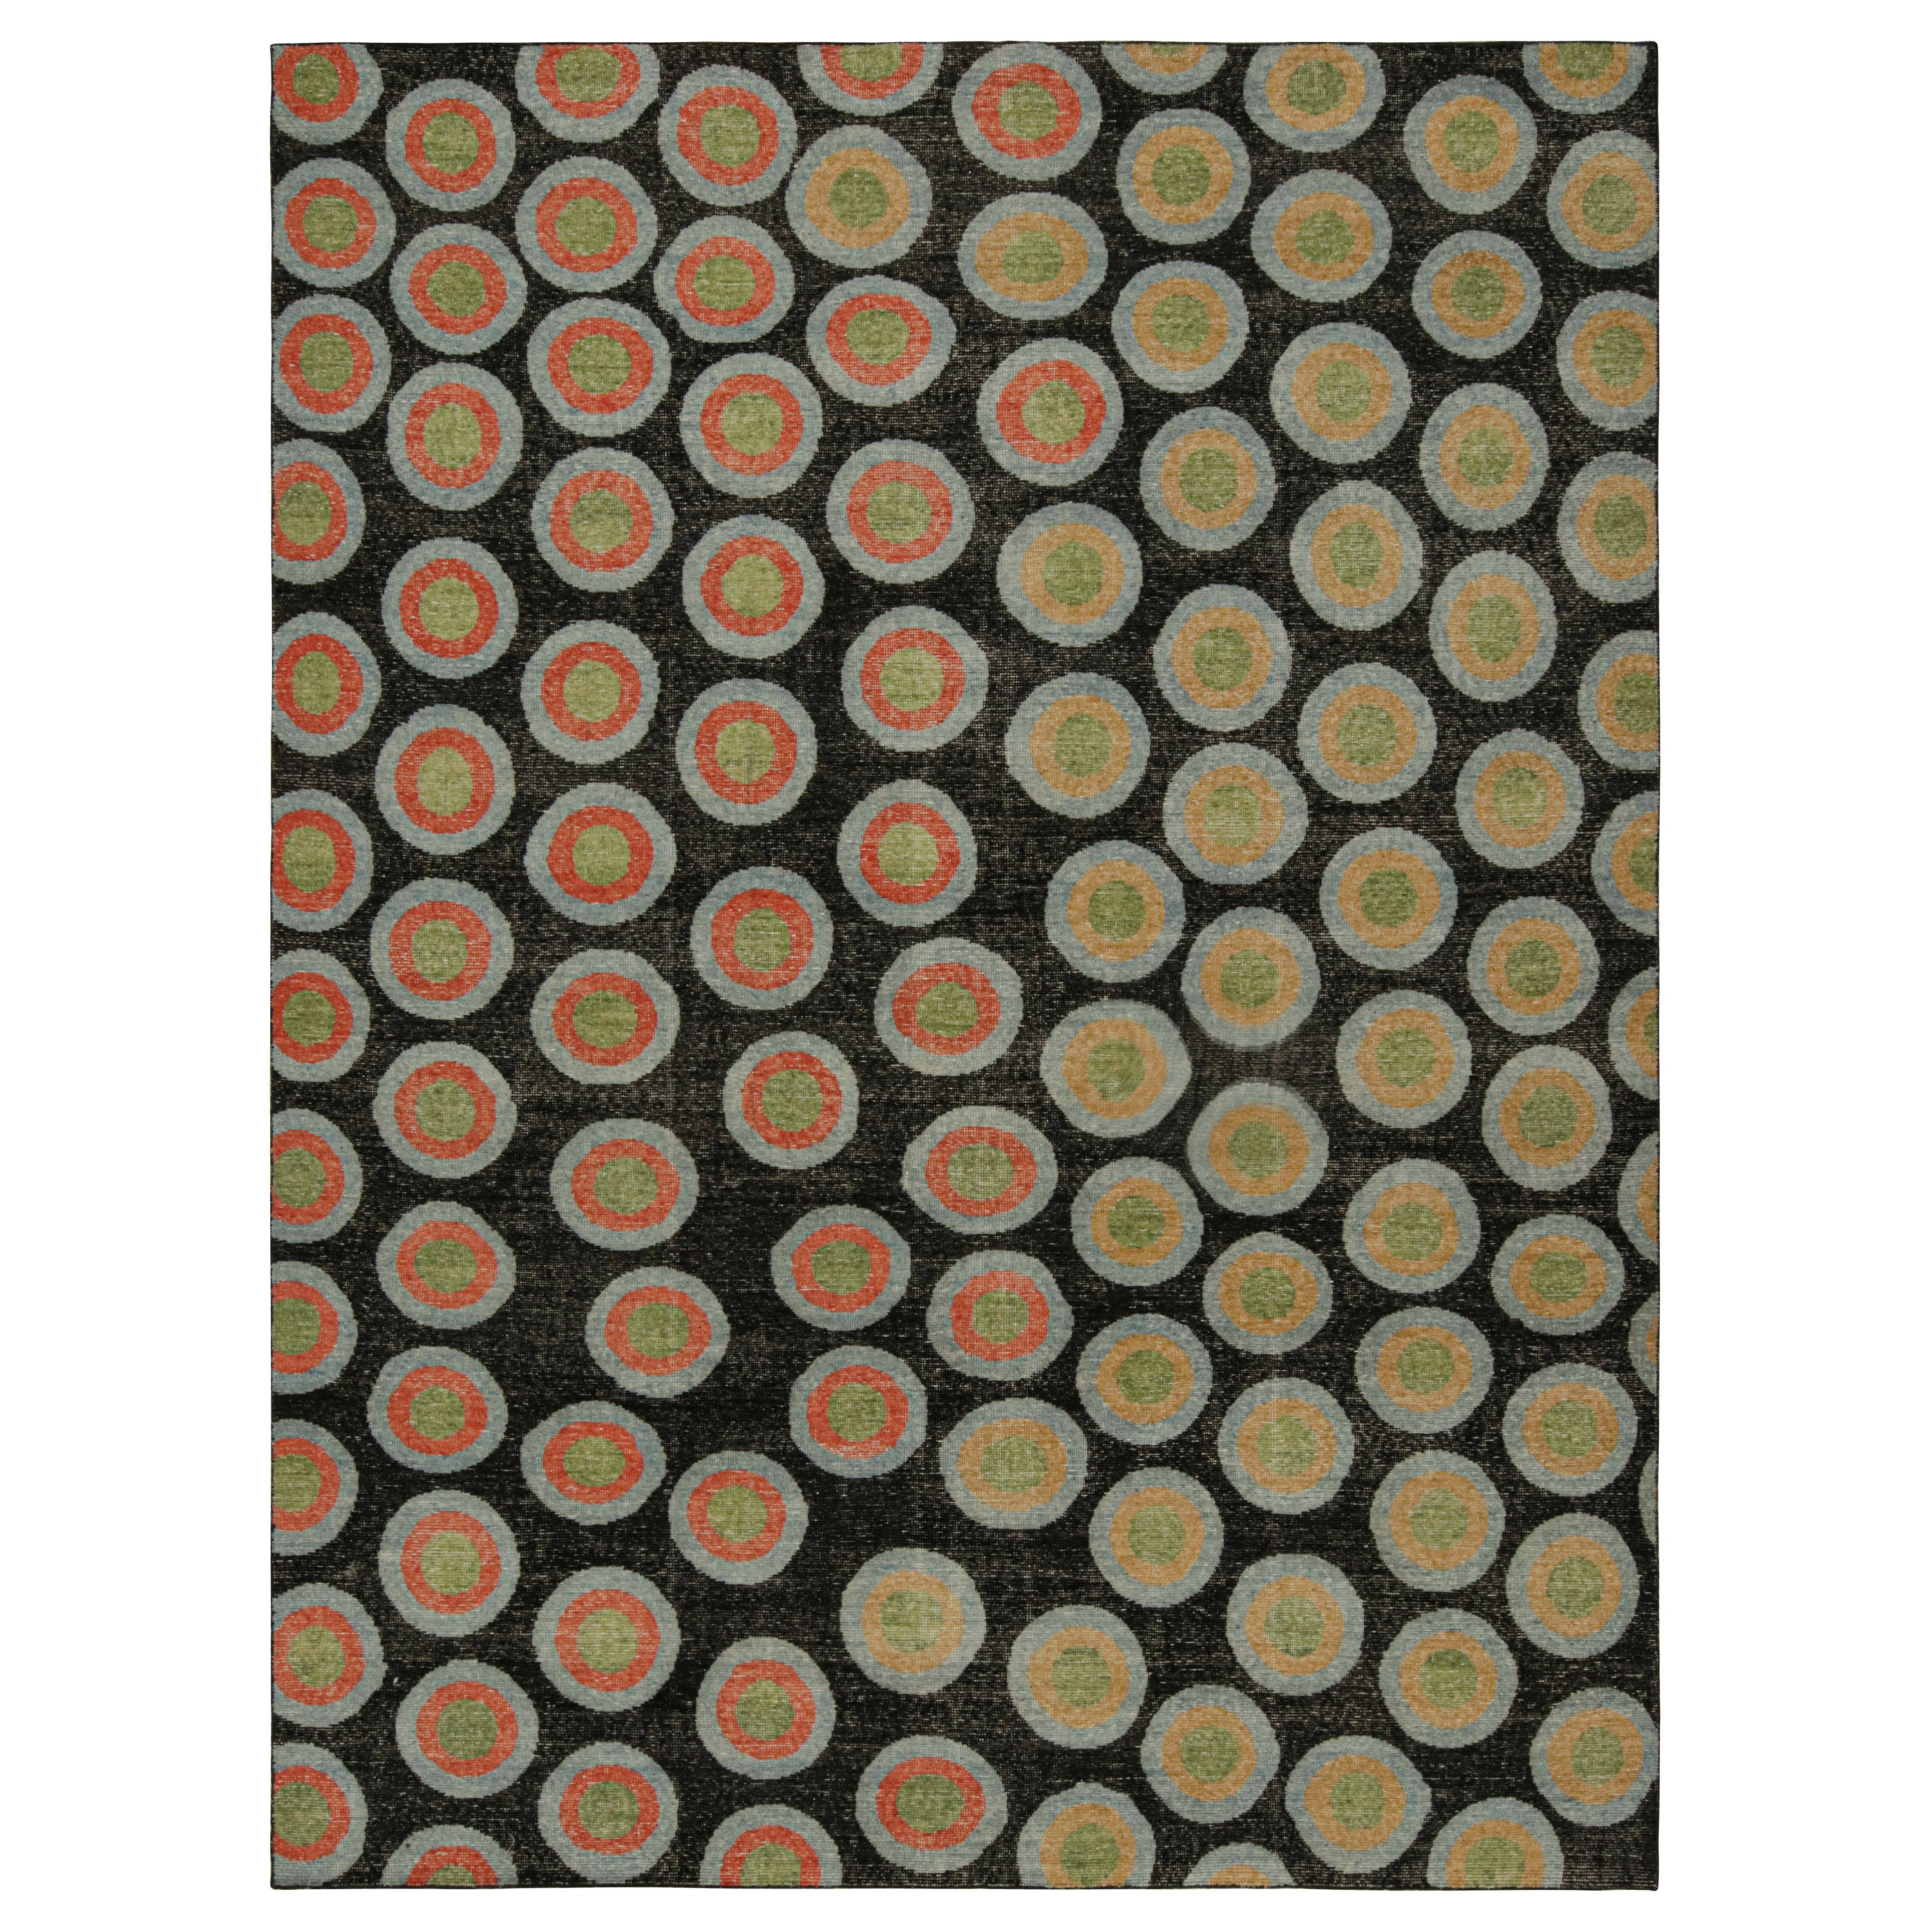 Rug & Kilim’s Modern Deco Rug, with Geometric Patterns in Green, Orange and Blue